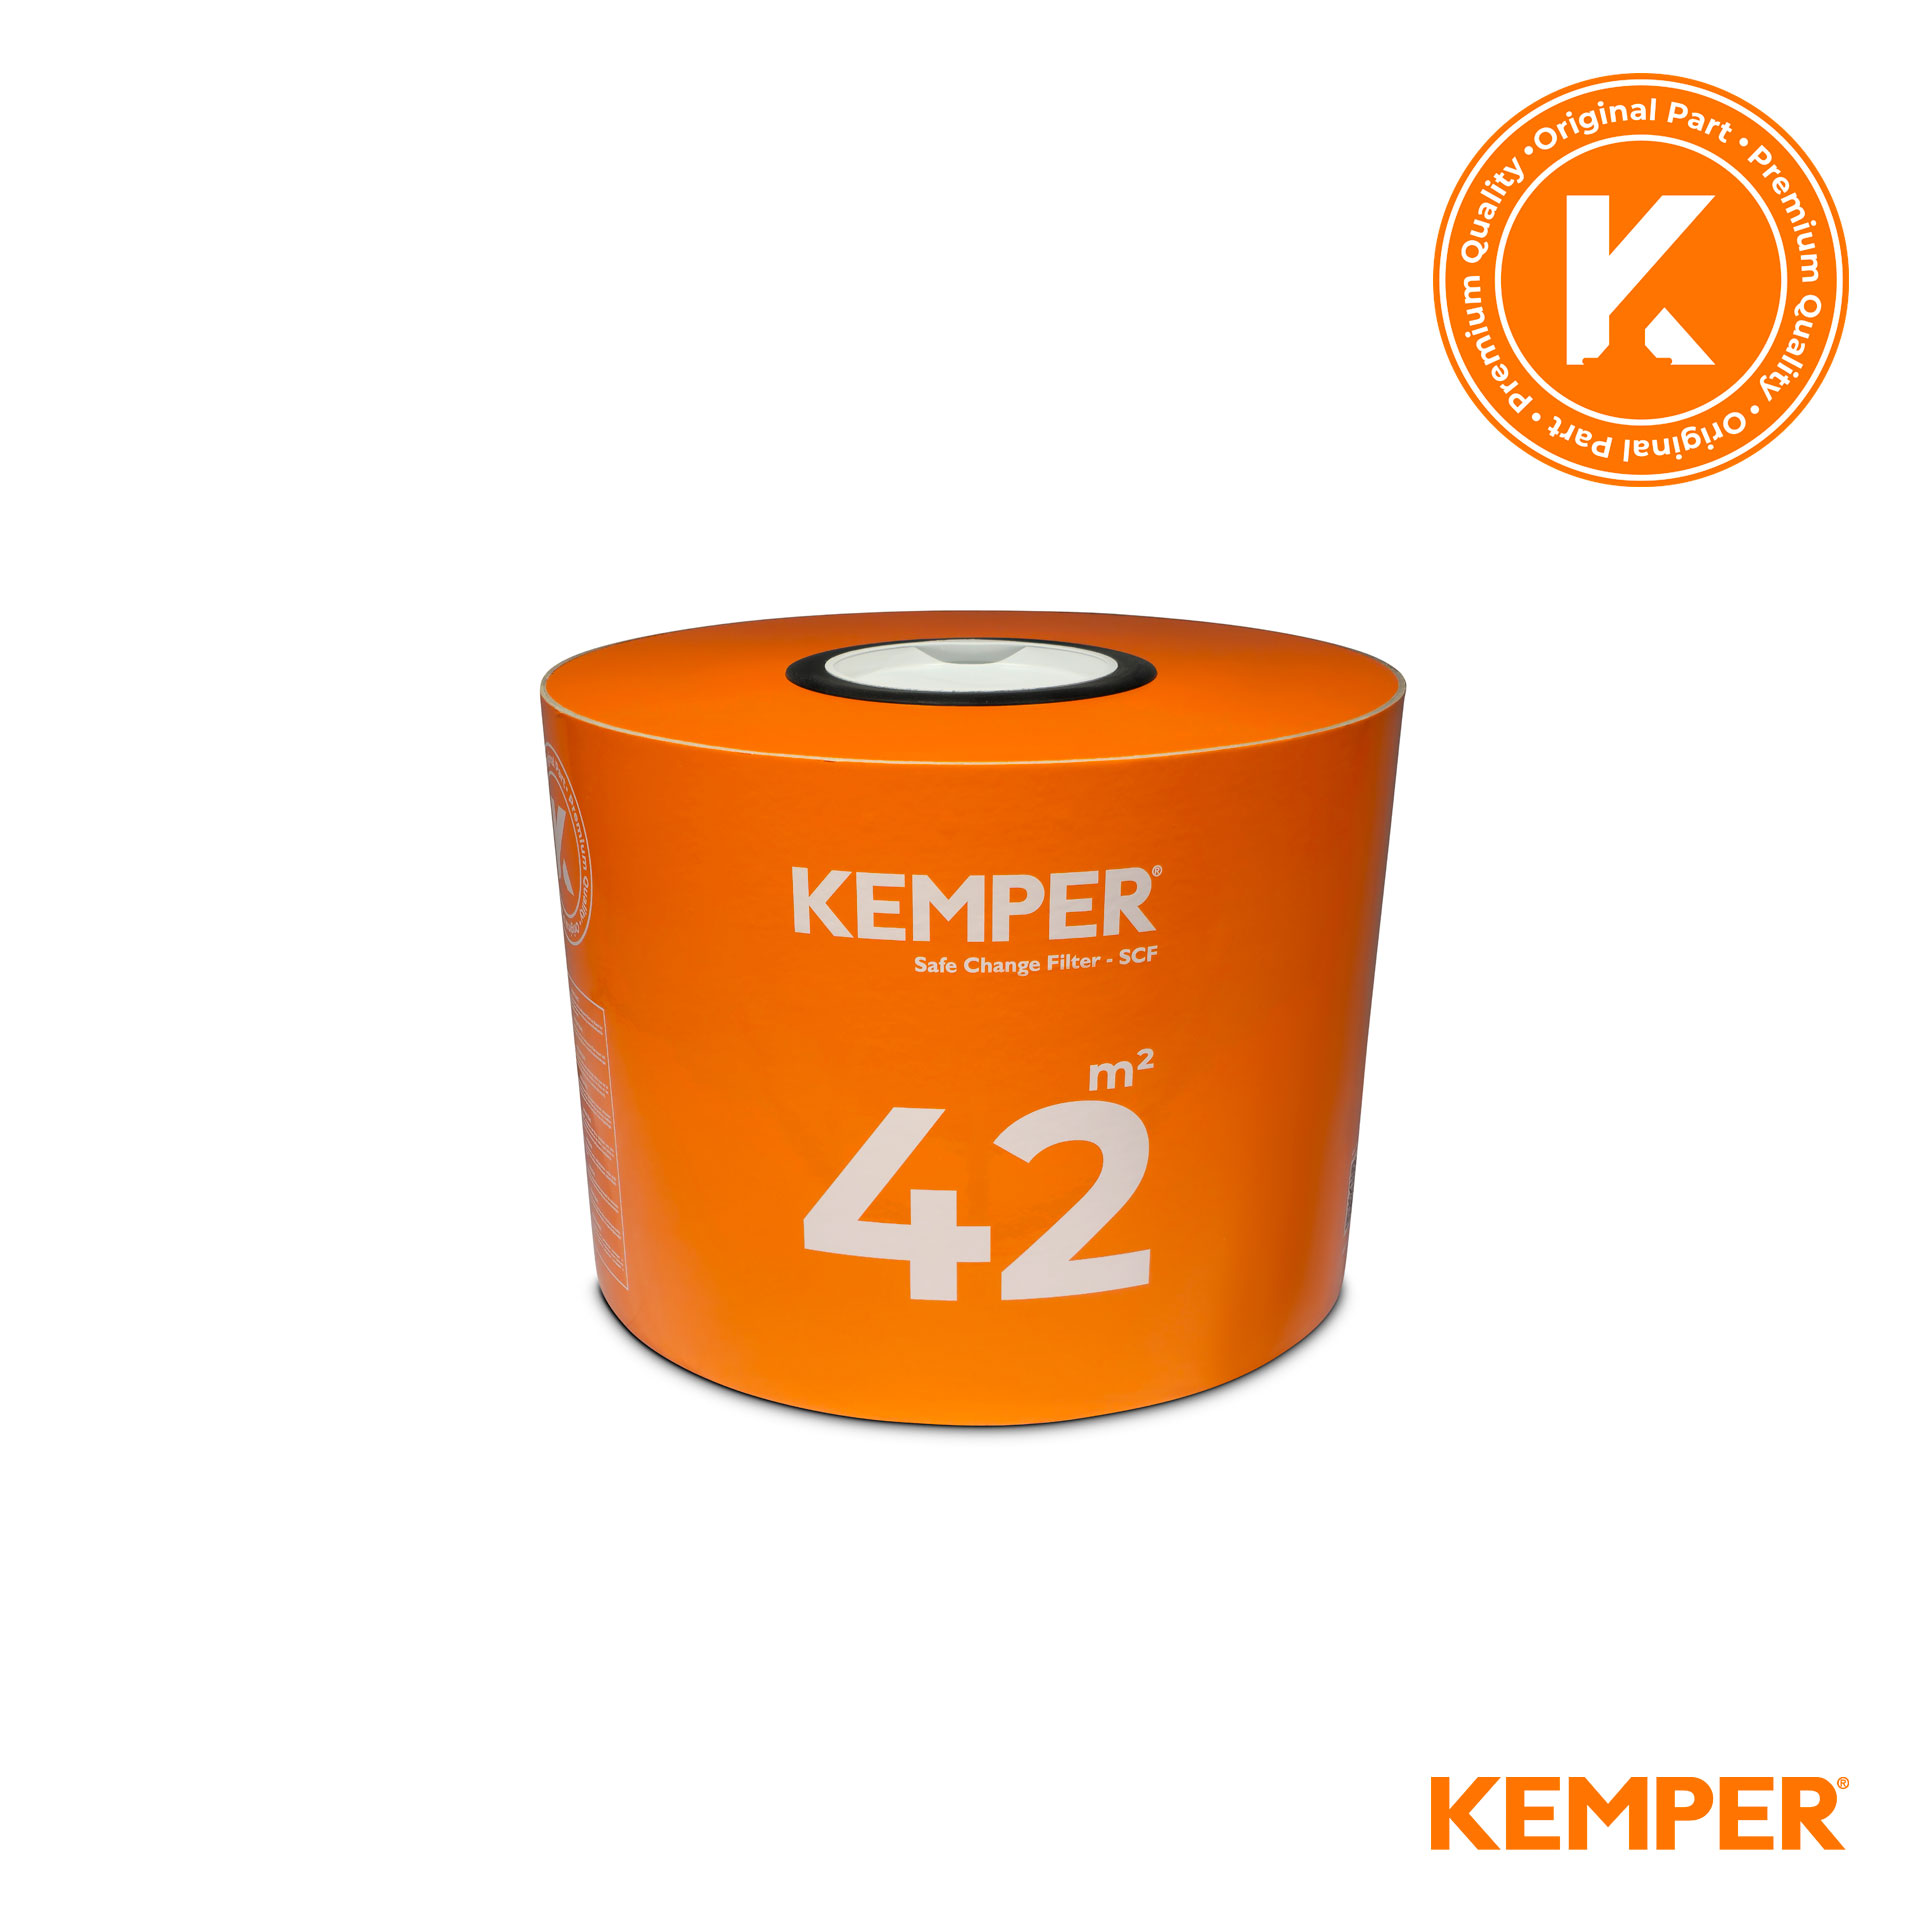 KEMPER MaxiFil SmartFil Rollenfilter mit Vorfilter - E12 - 42 m²